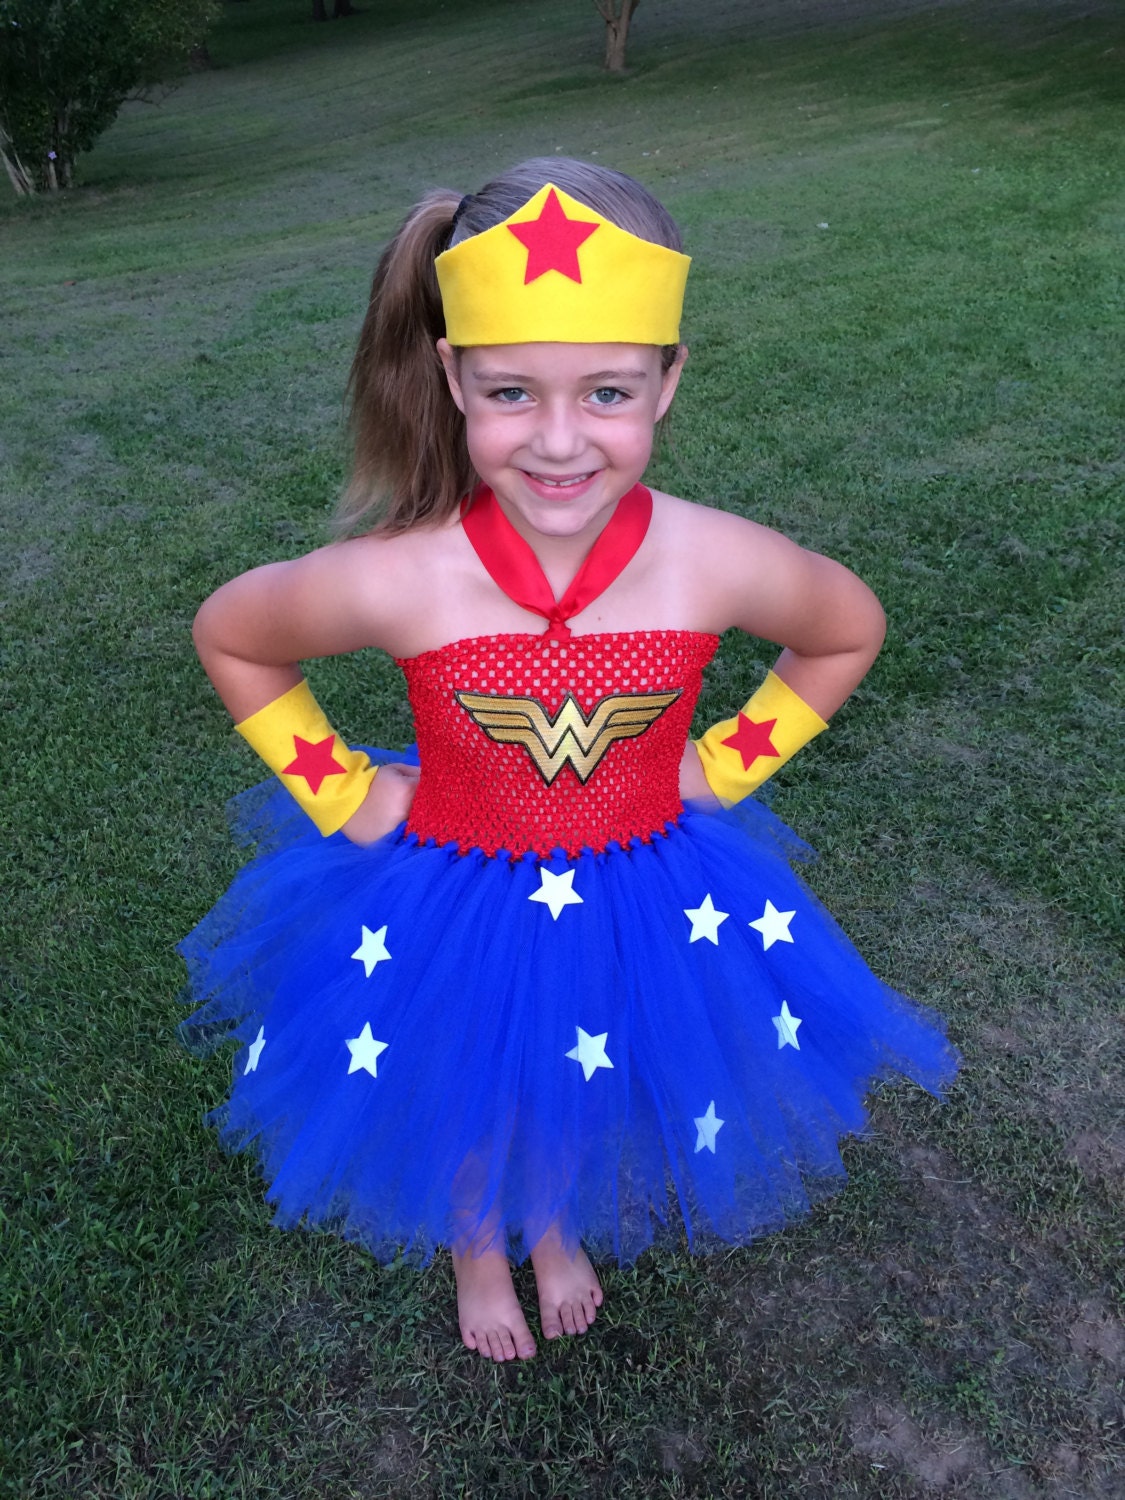 Wonder Woman costume tutu dress. FREE SHIPPING Great for